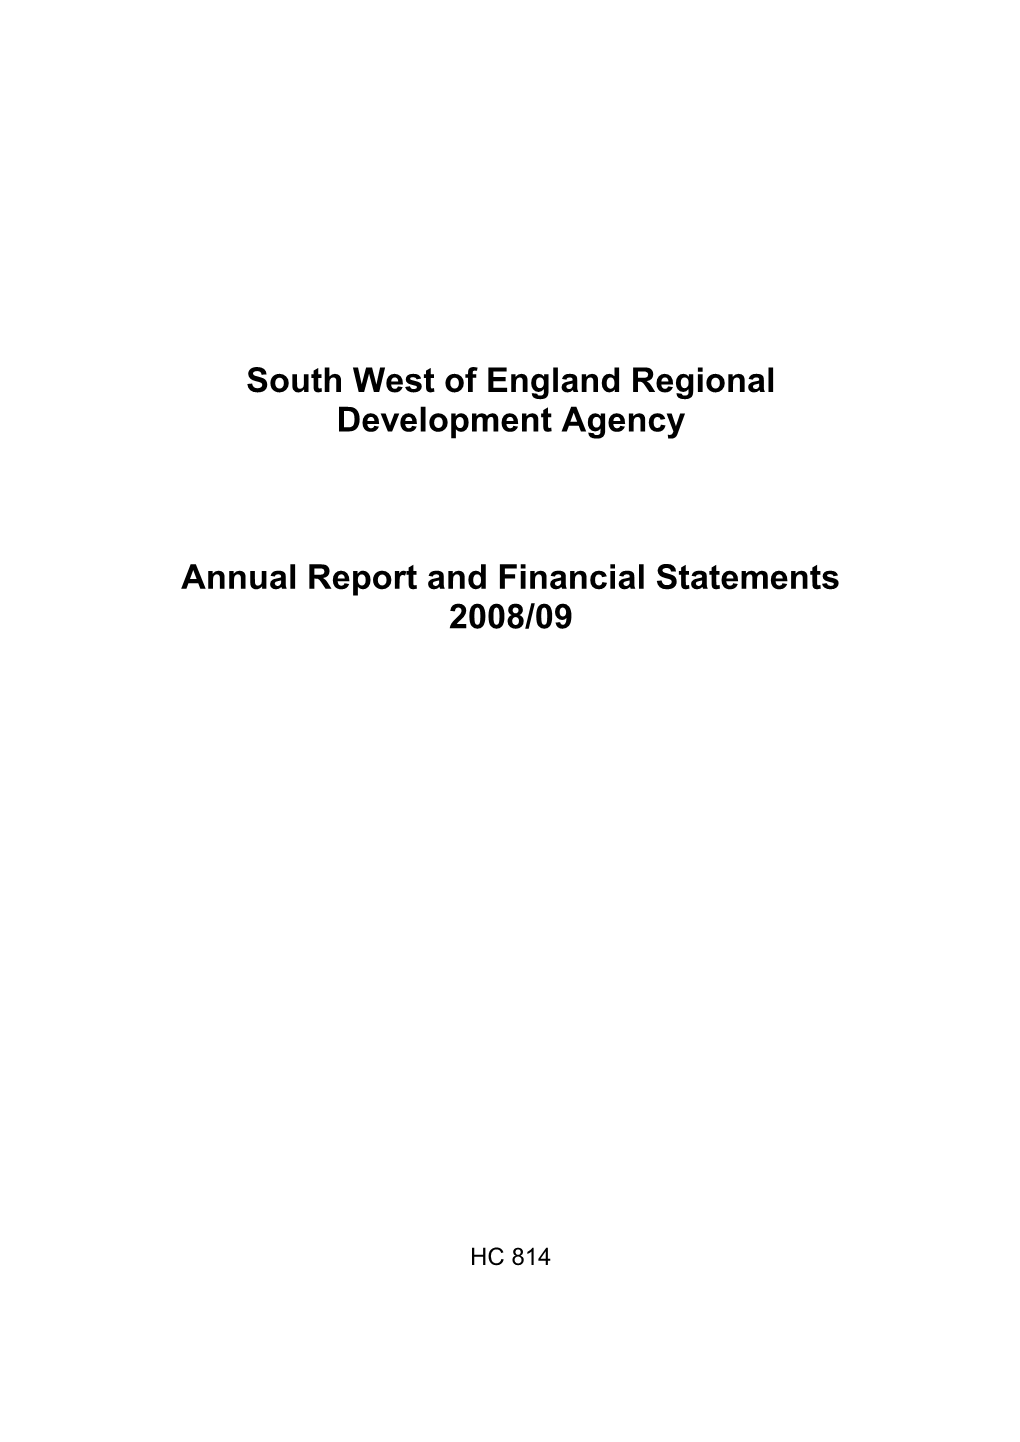 South West of England Regional Development Agency Annual